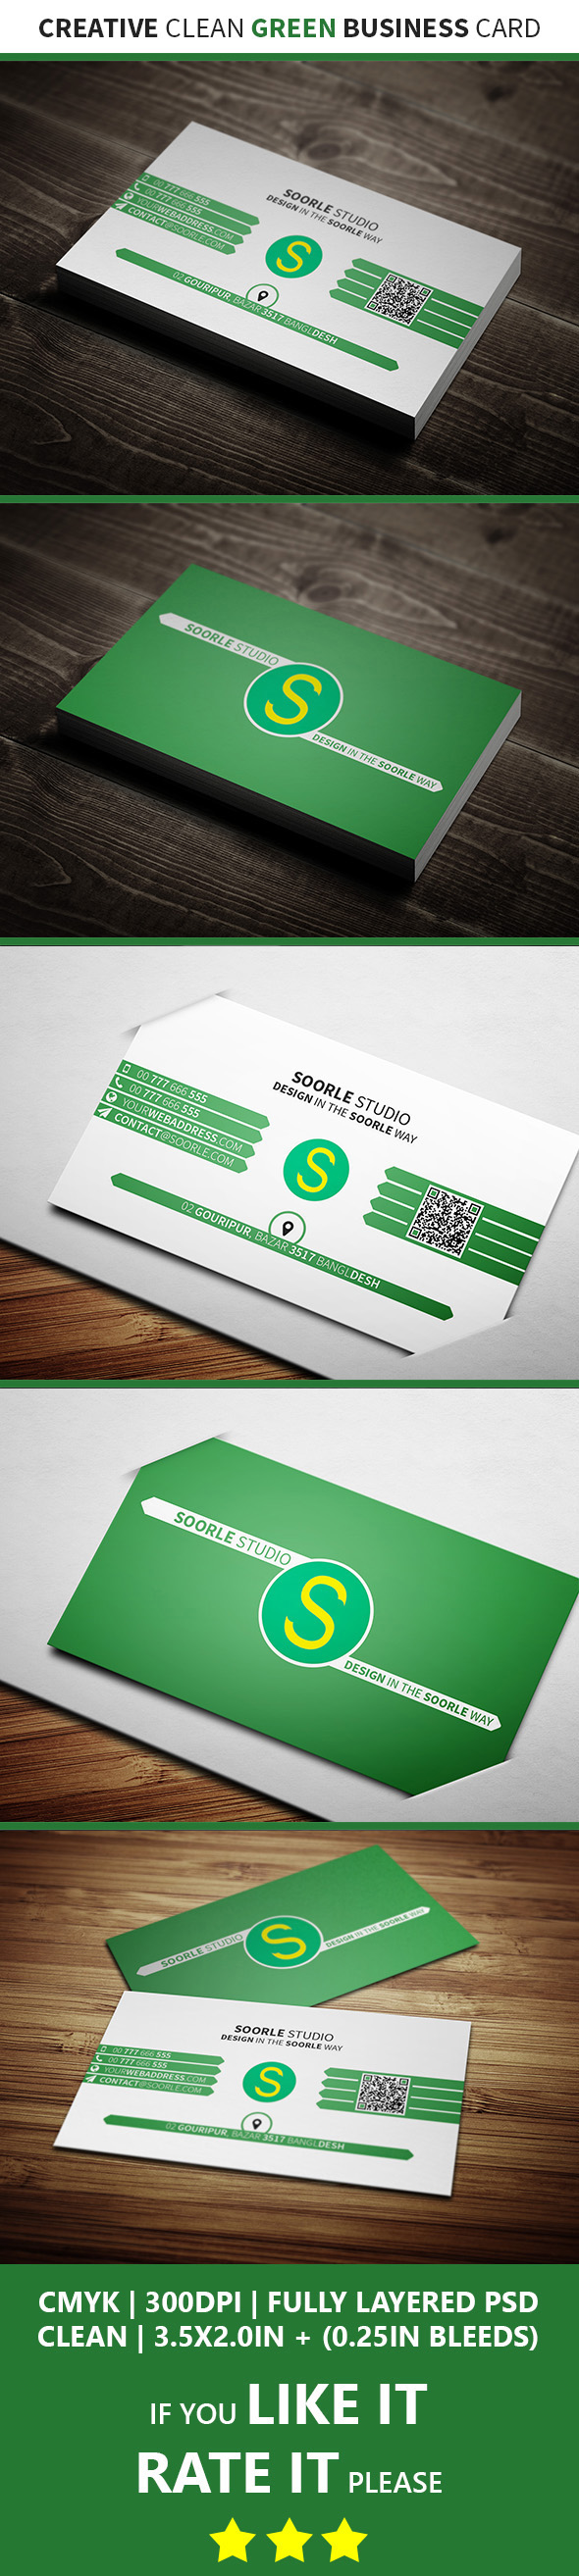 300dpi Business-Card clean CMYK creative fully-editable logo psd qrcode green